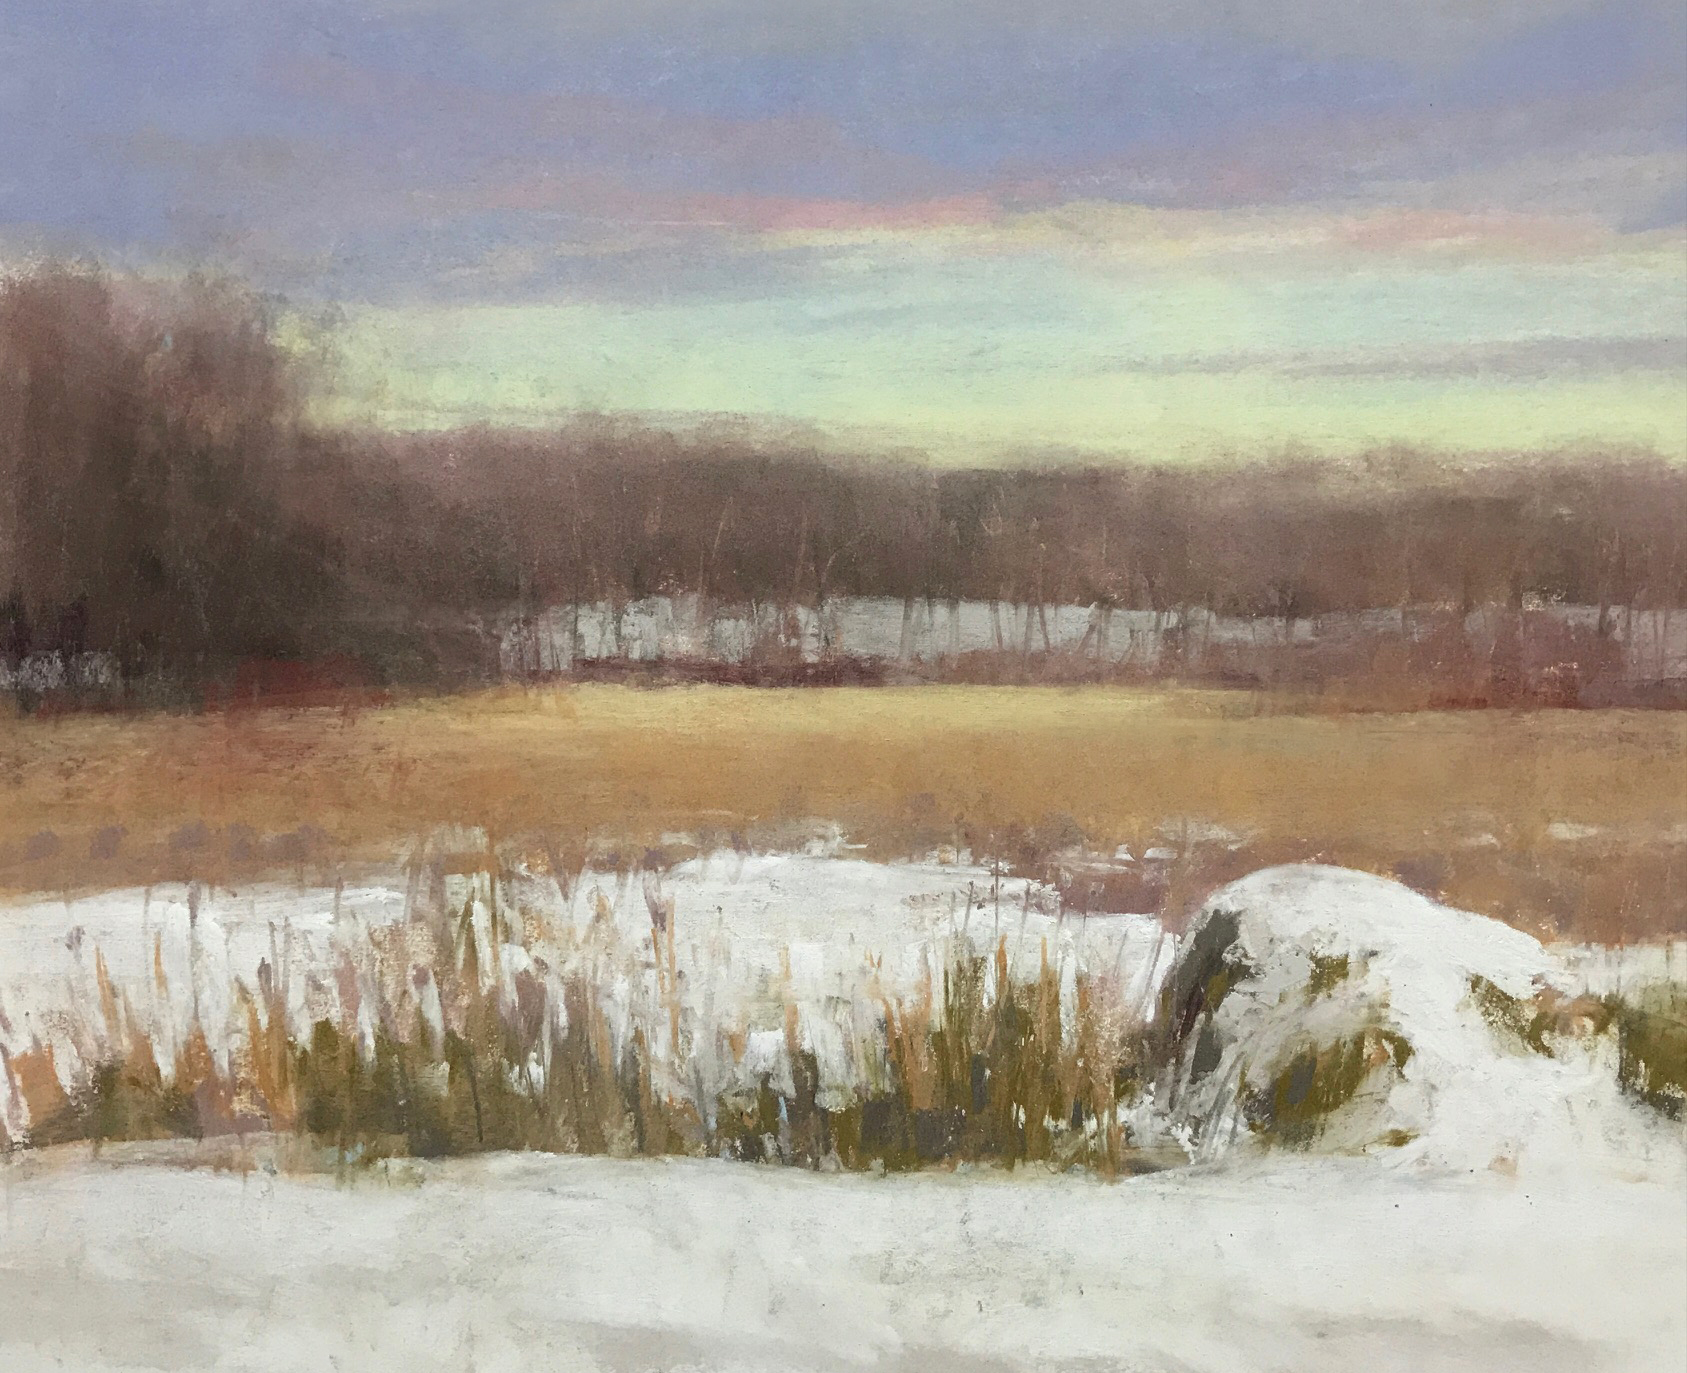 Christopher Copeland, "Winter Twilight," pastel, 11x14in